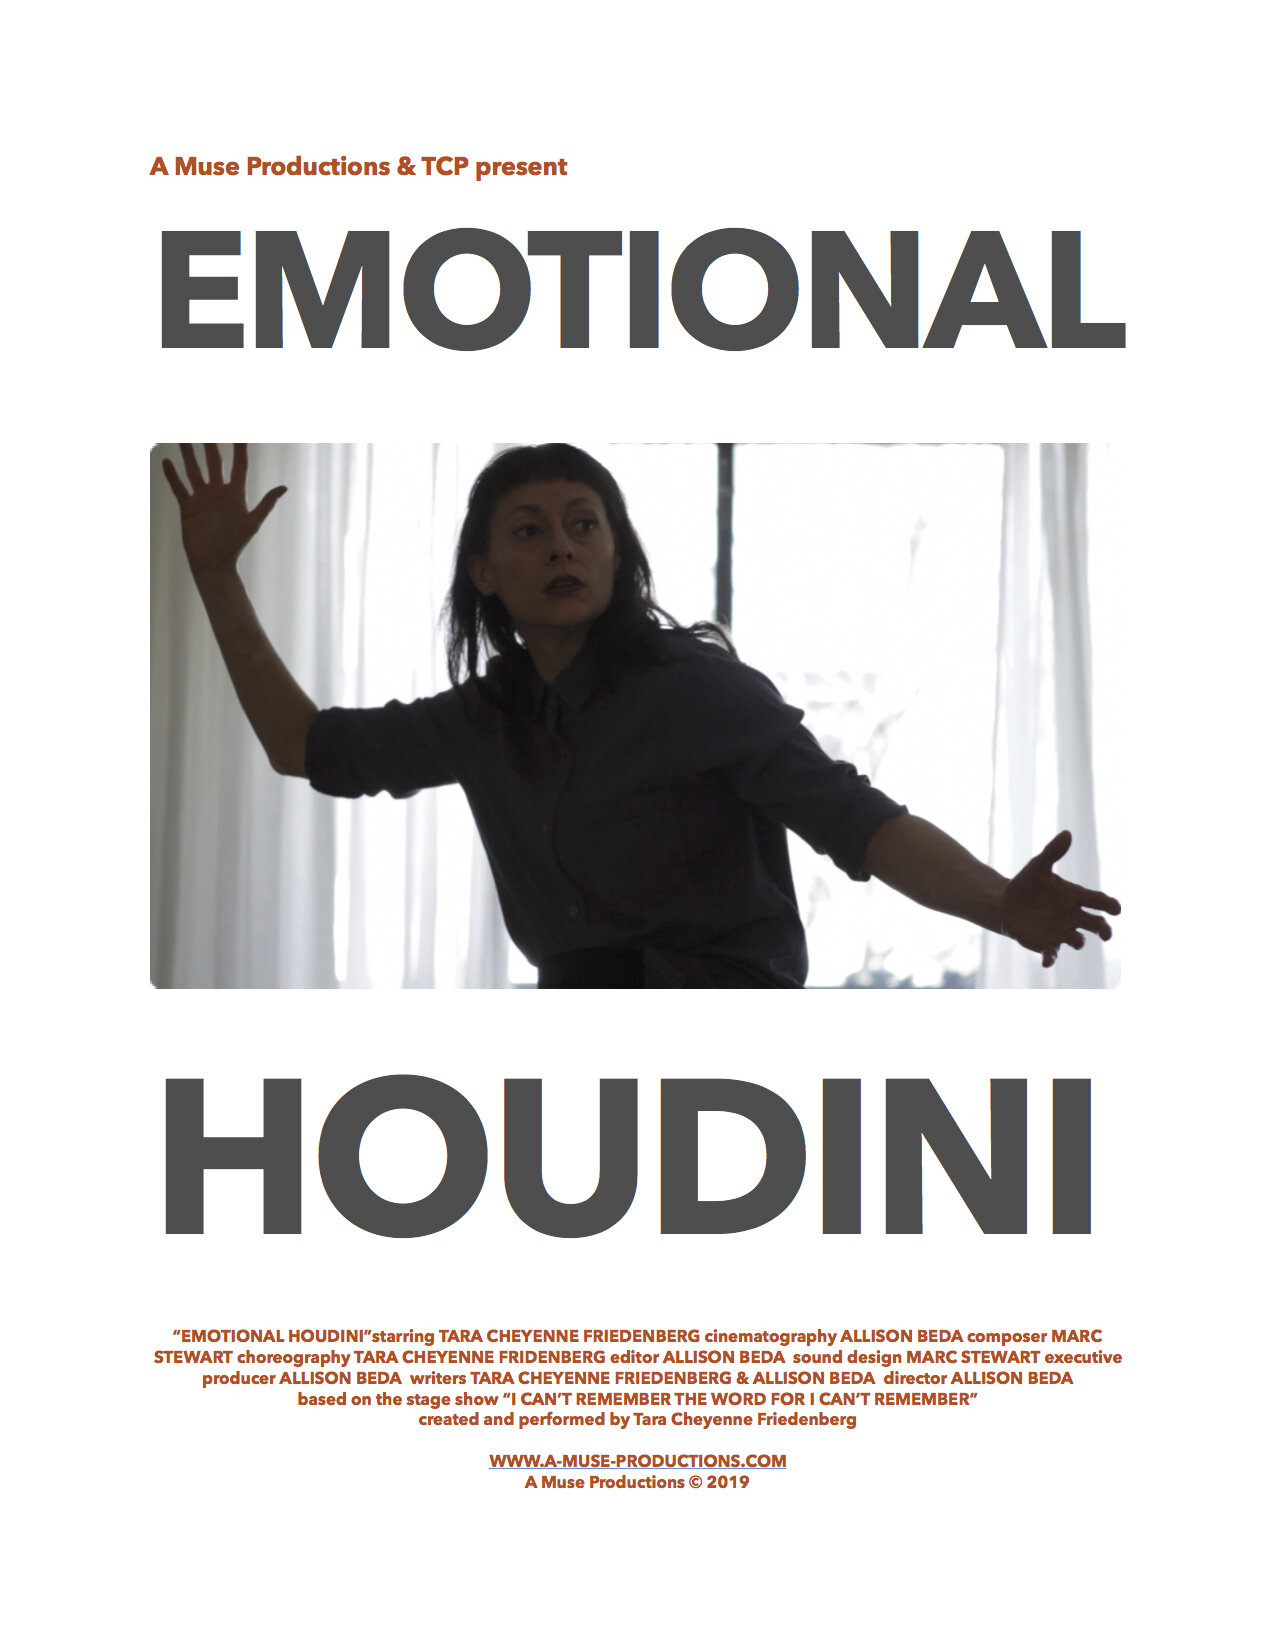 EMOTIONAL HOUDINI poster draft 3a.jpg